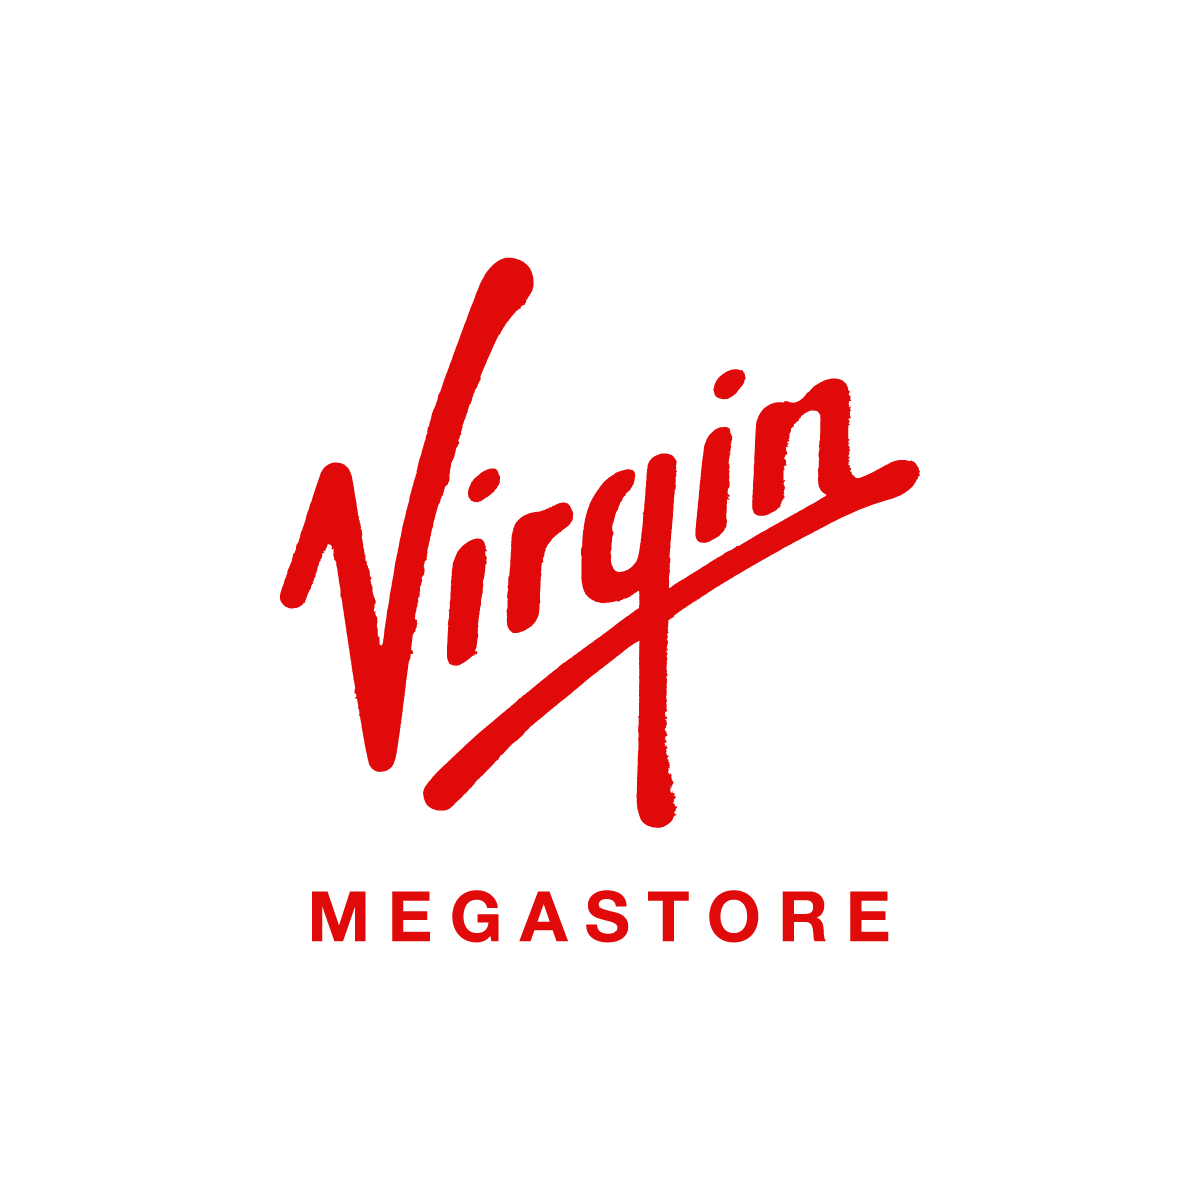 Virgin Megastore Dubai 04 457 1651